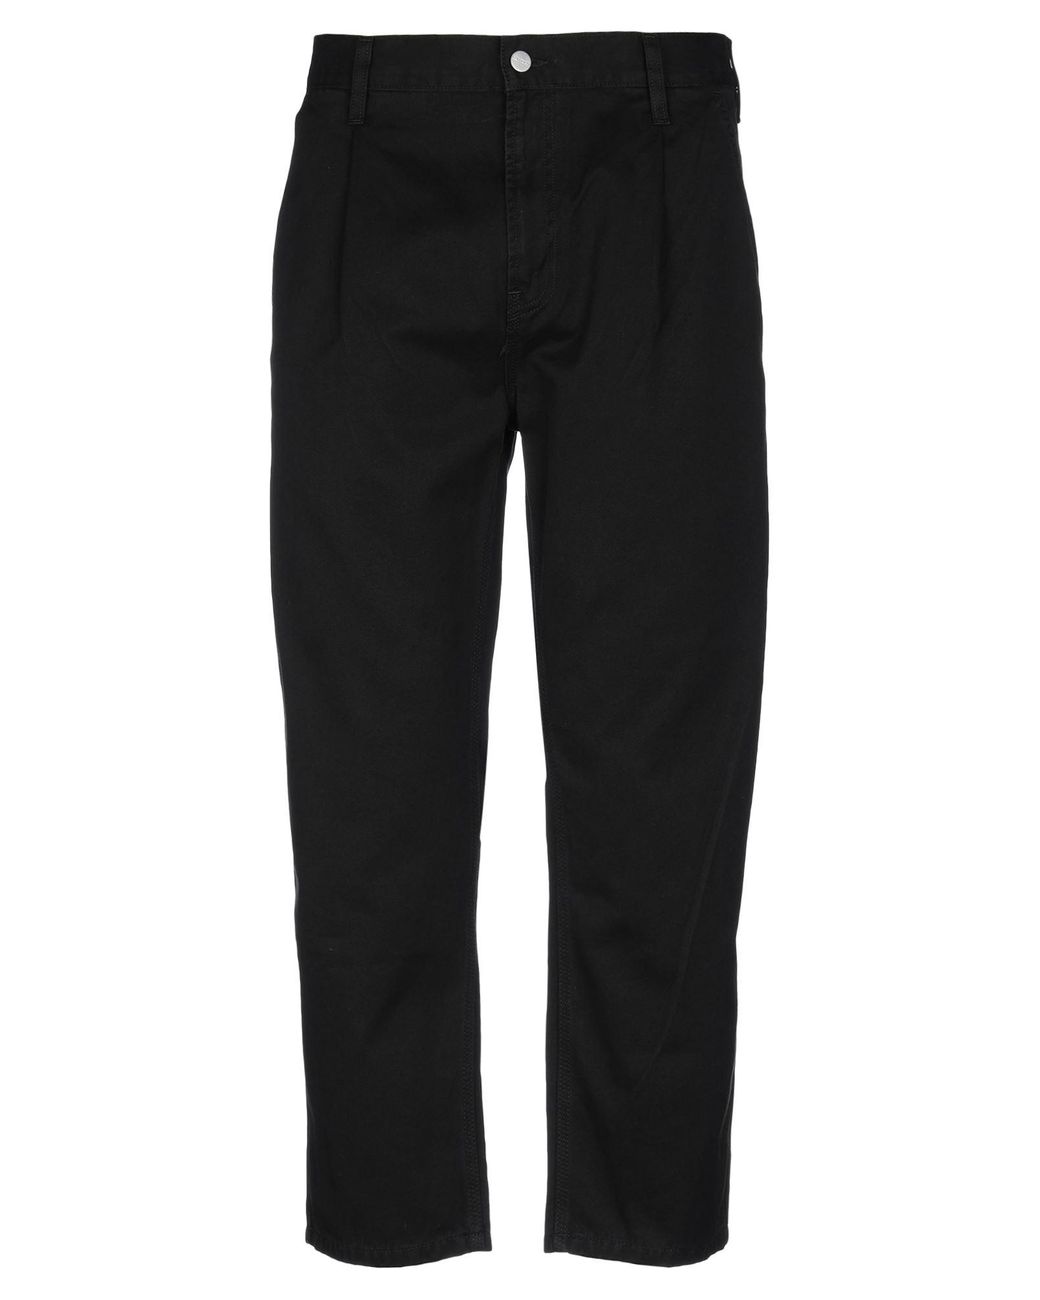 Carhartt Casual Trouser in Black for Men - Lyst